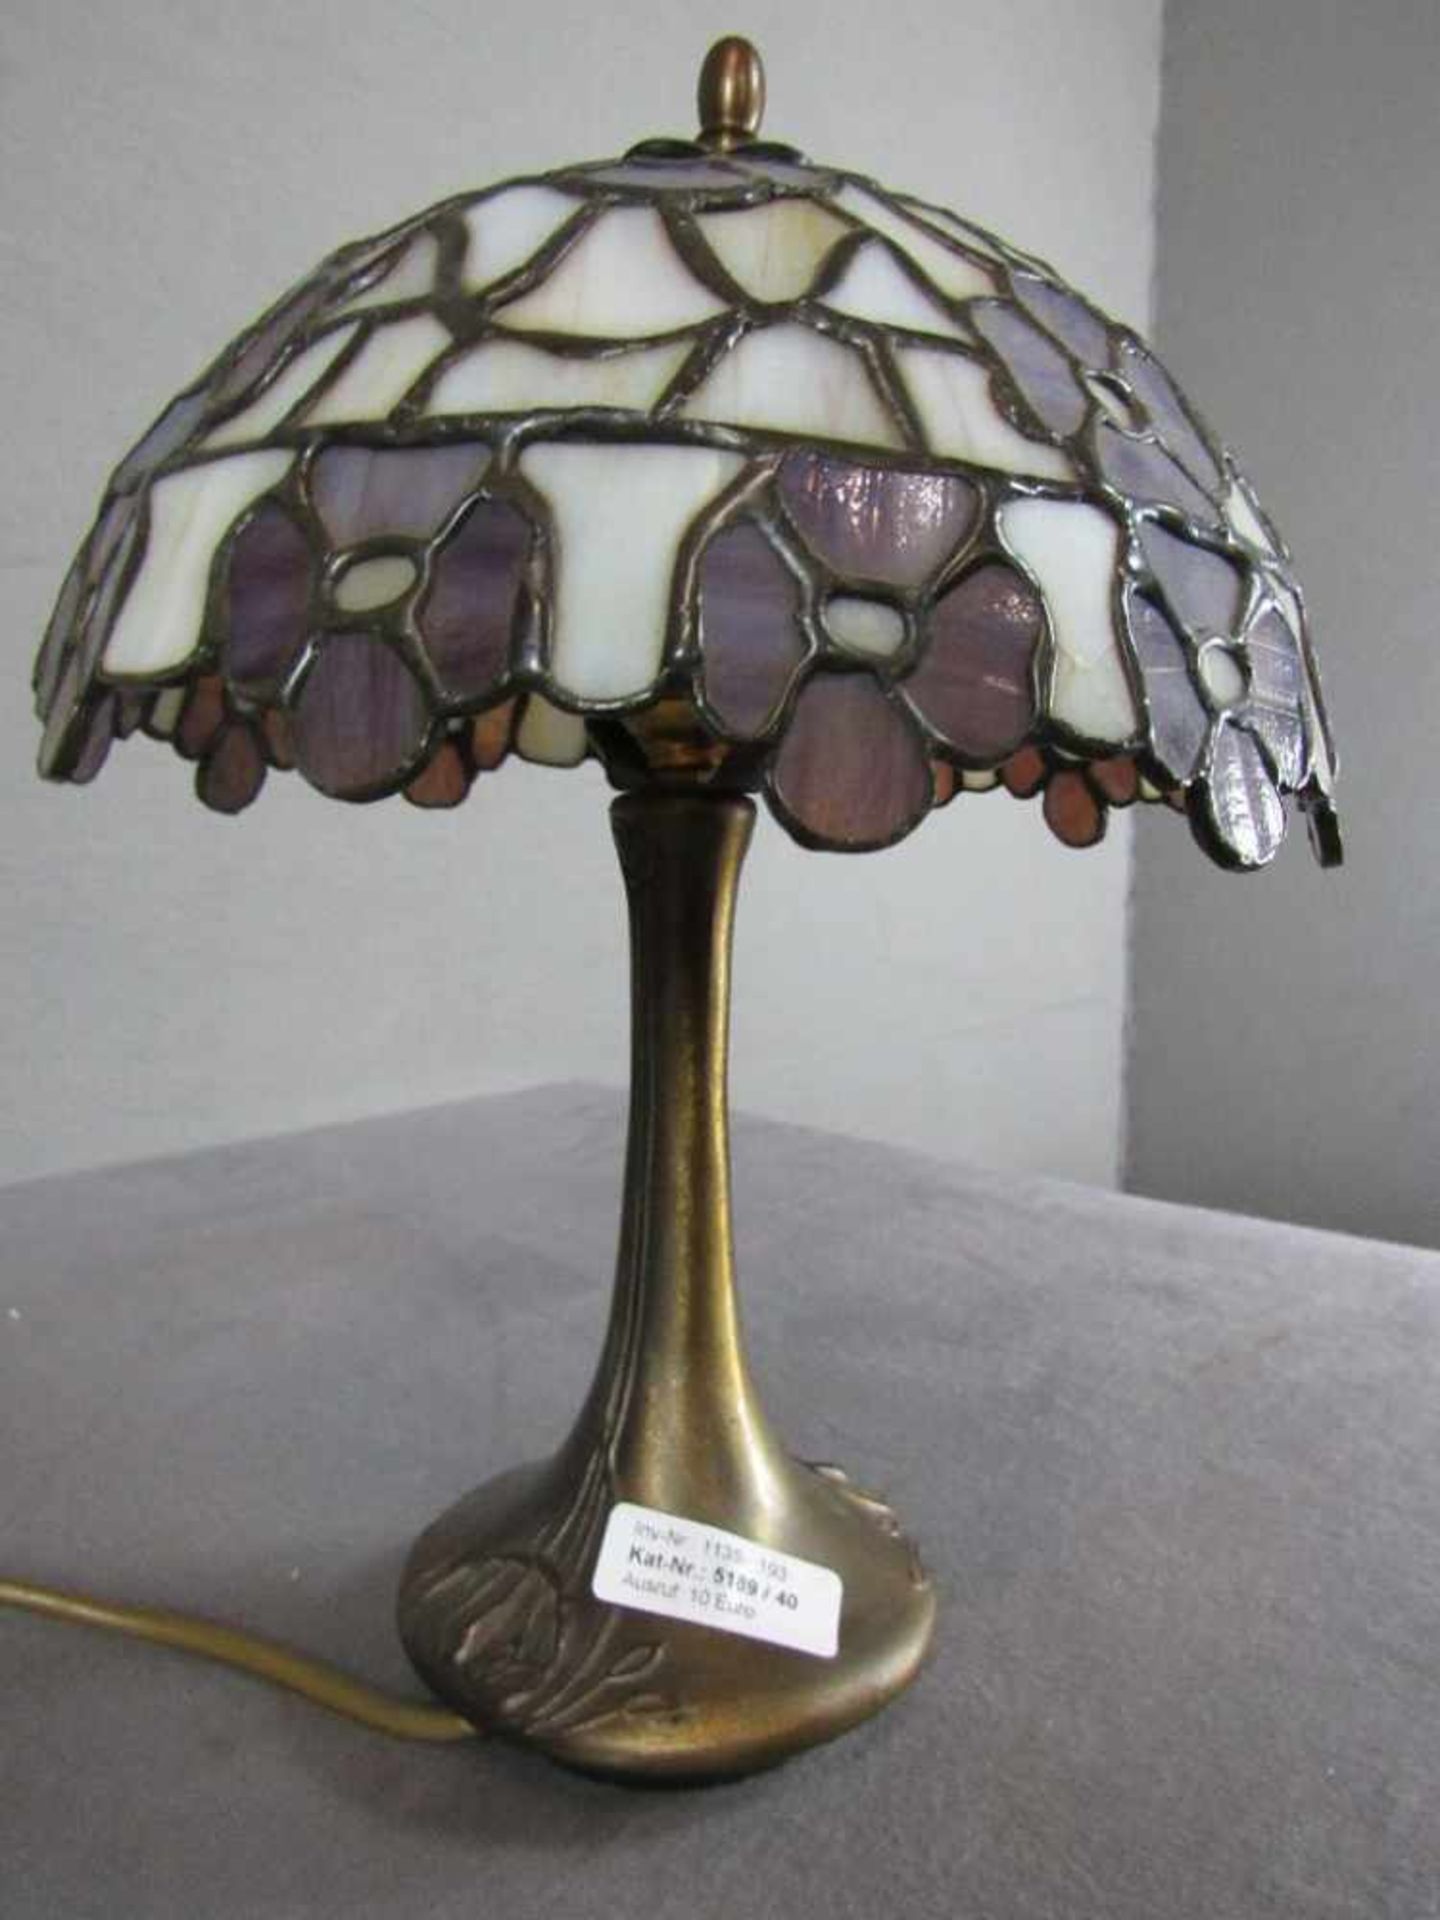 Tischlampe in Jugendstilmanier - Image 2 of 4